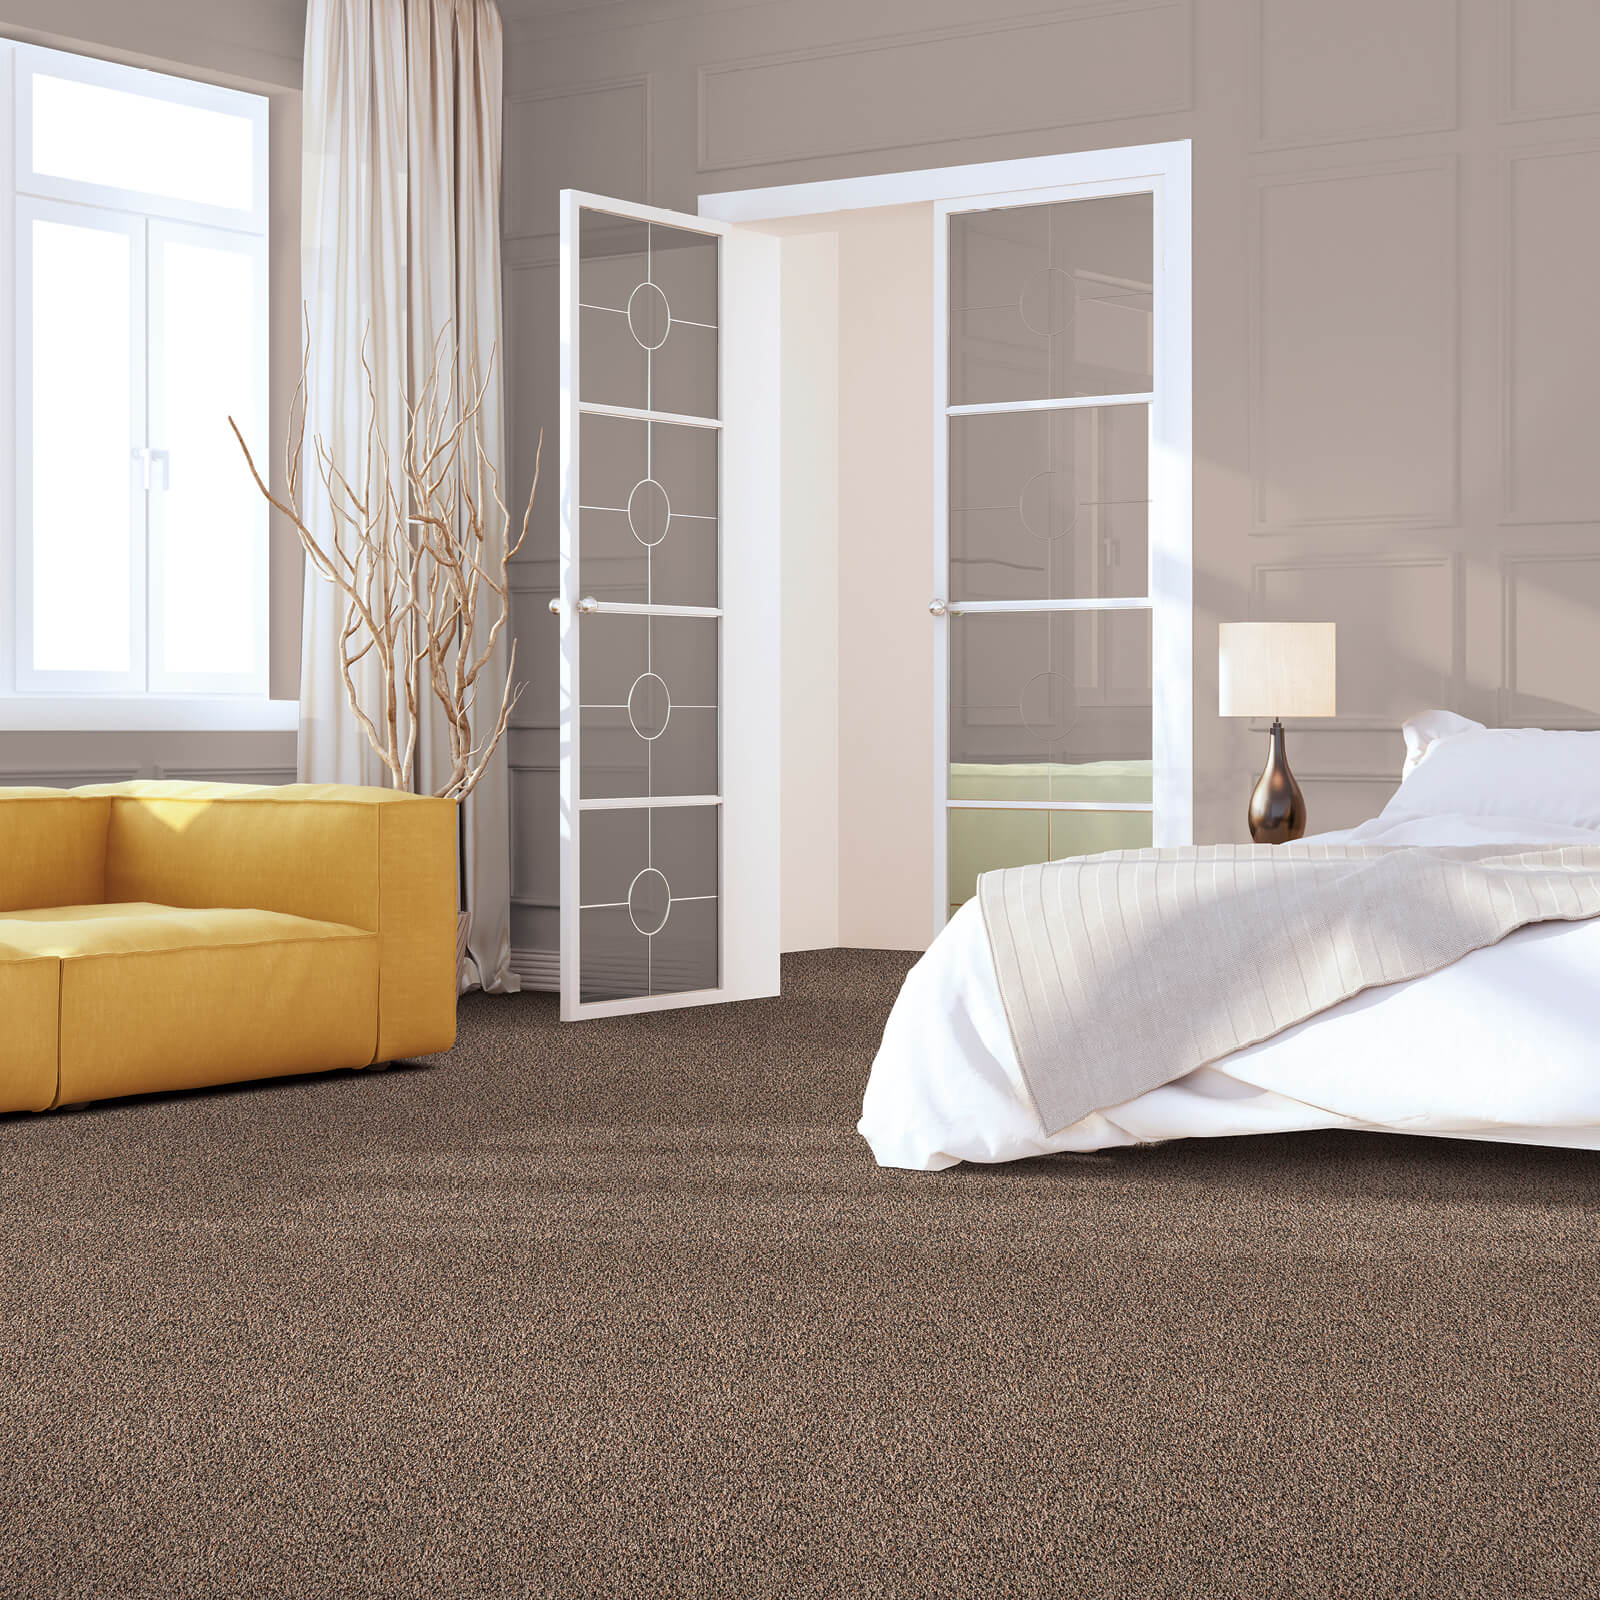 Carpeting in Bedroom | Haley's Flooring & Interiors